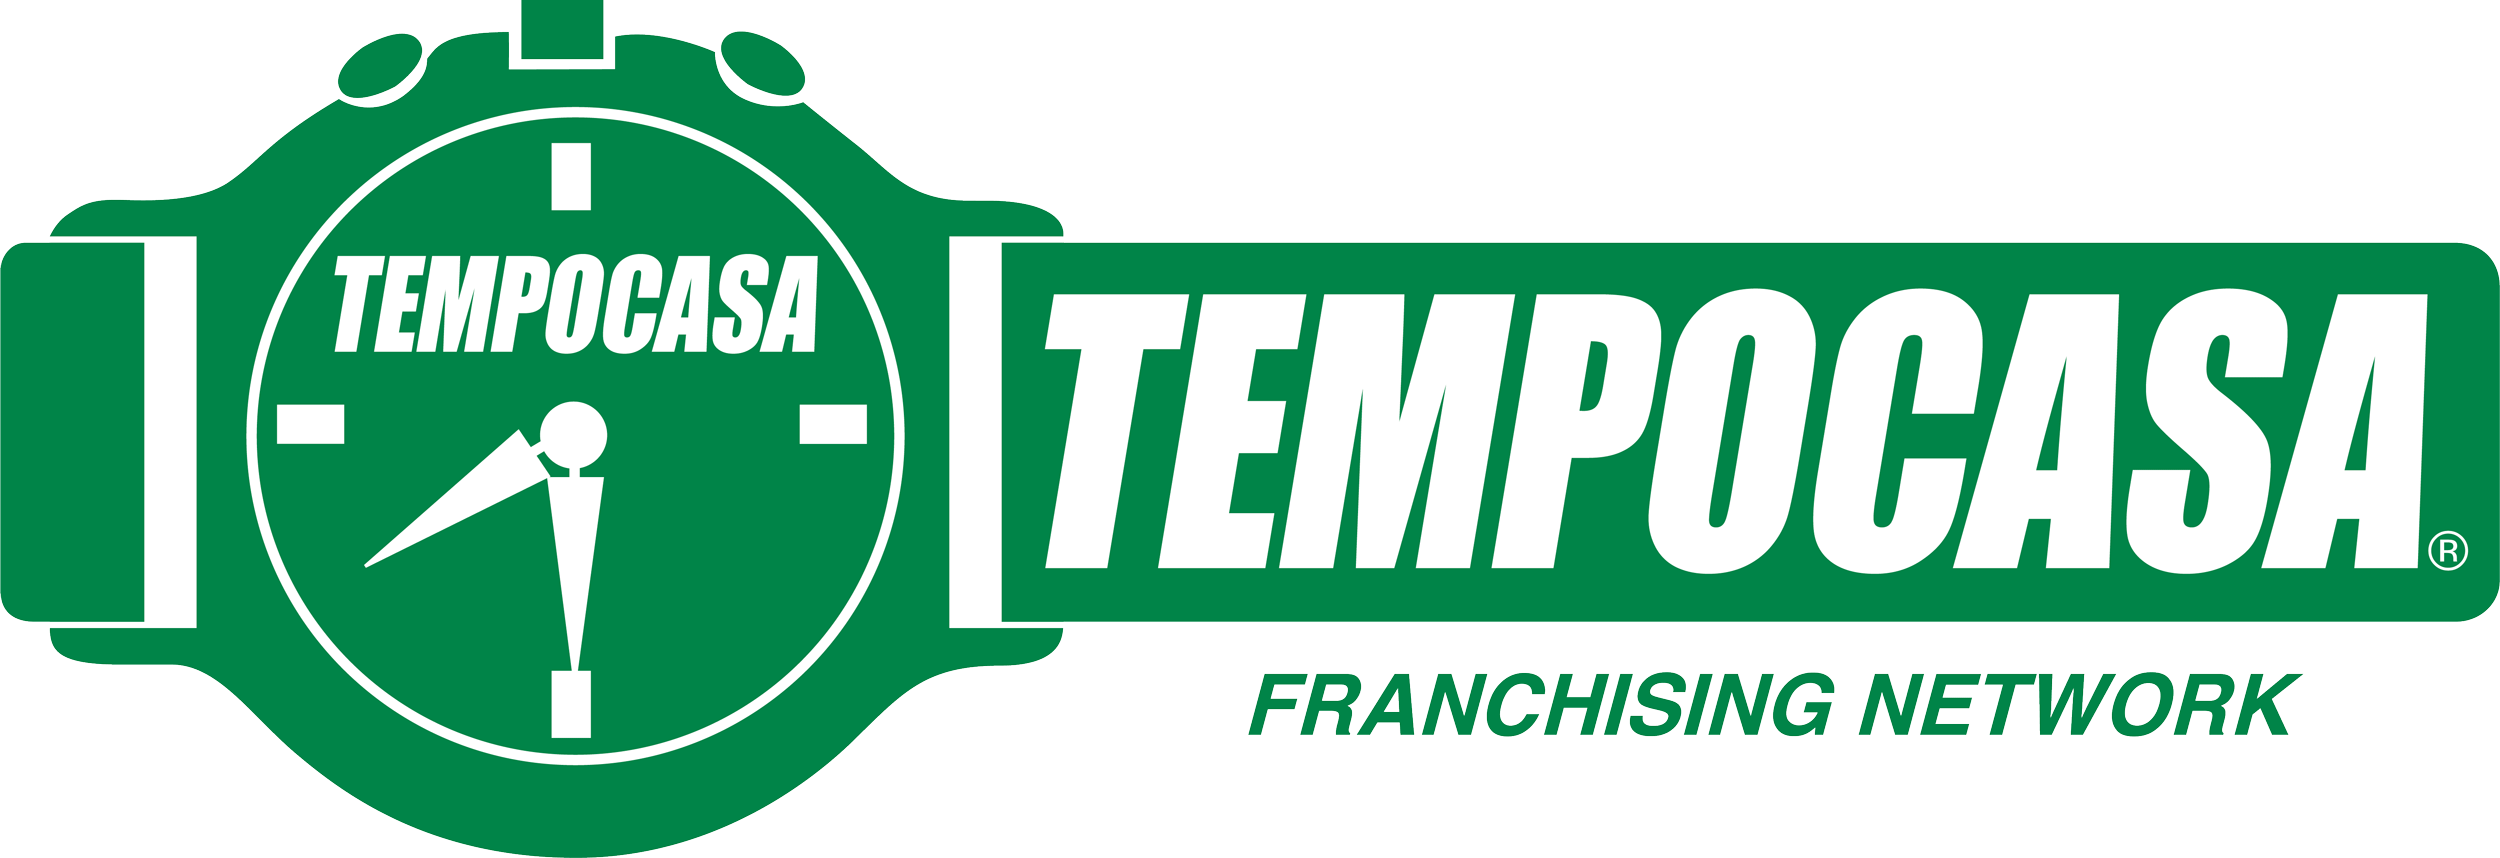 Milano - Testi - Tempocasa